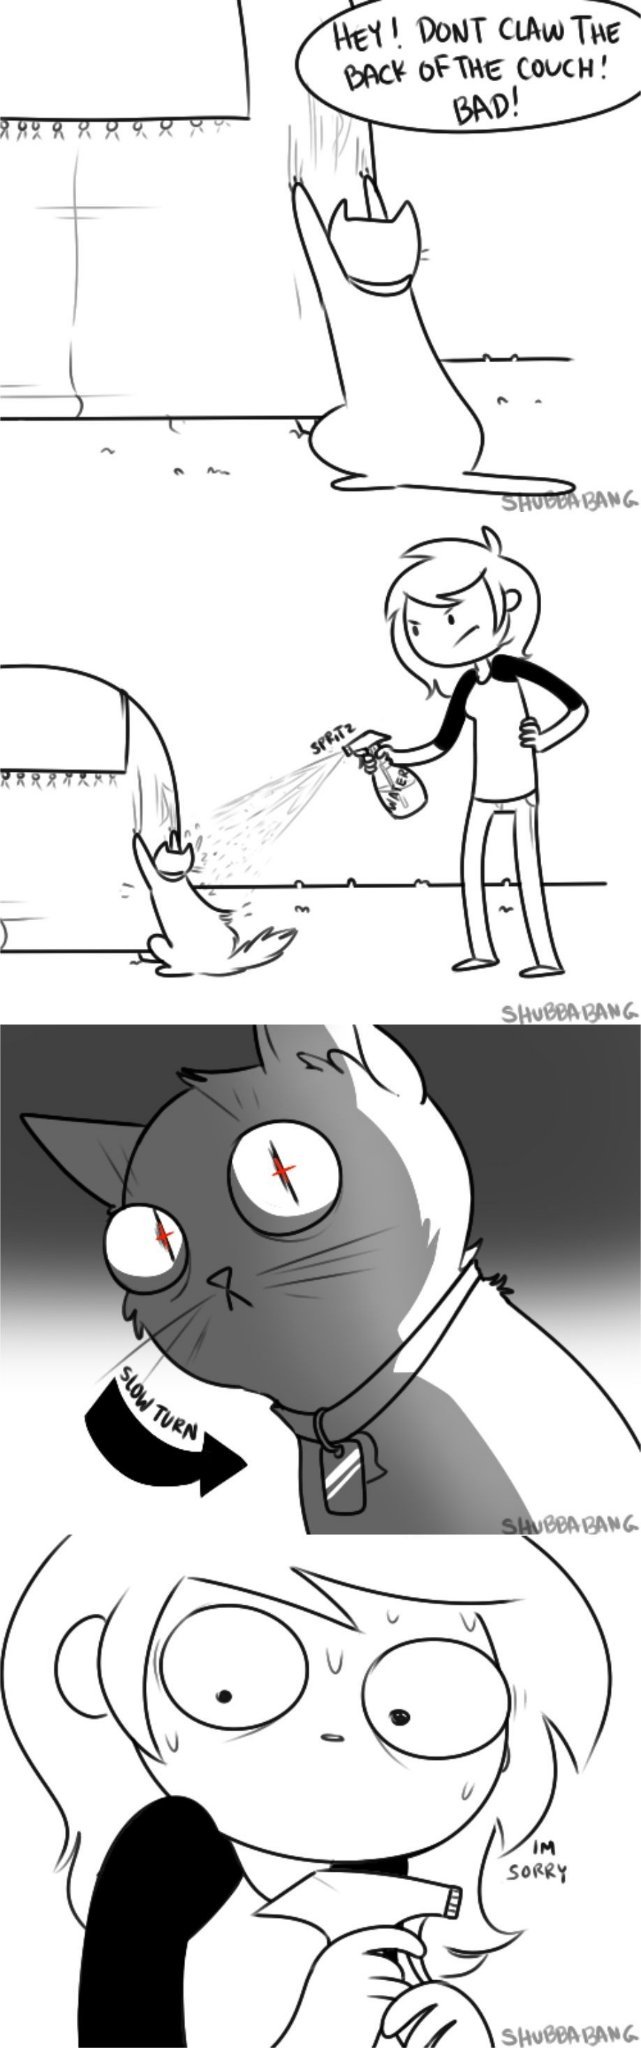 Demon cat - meme